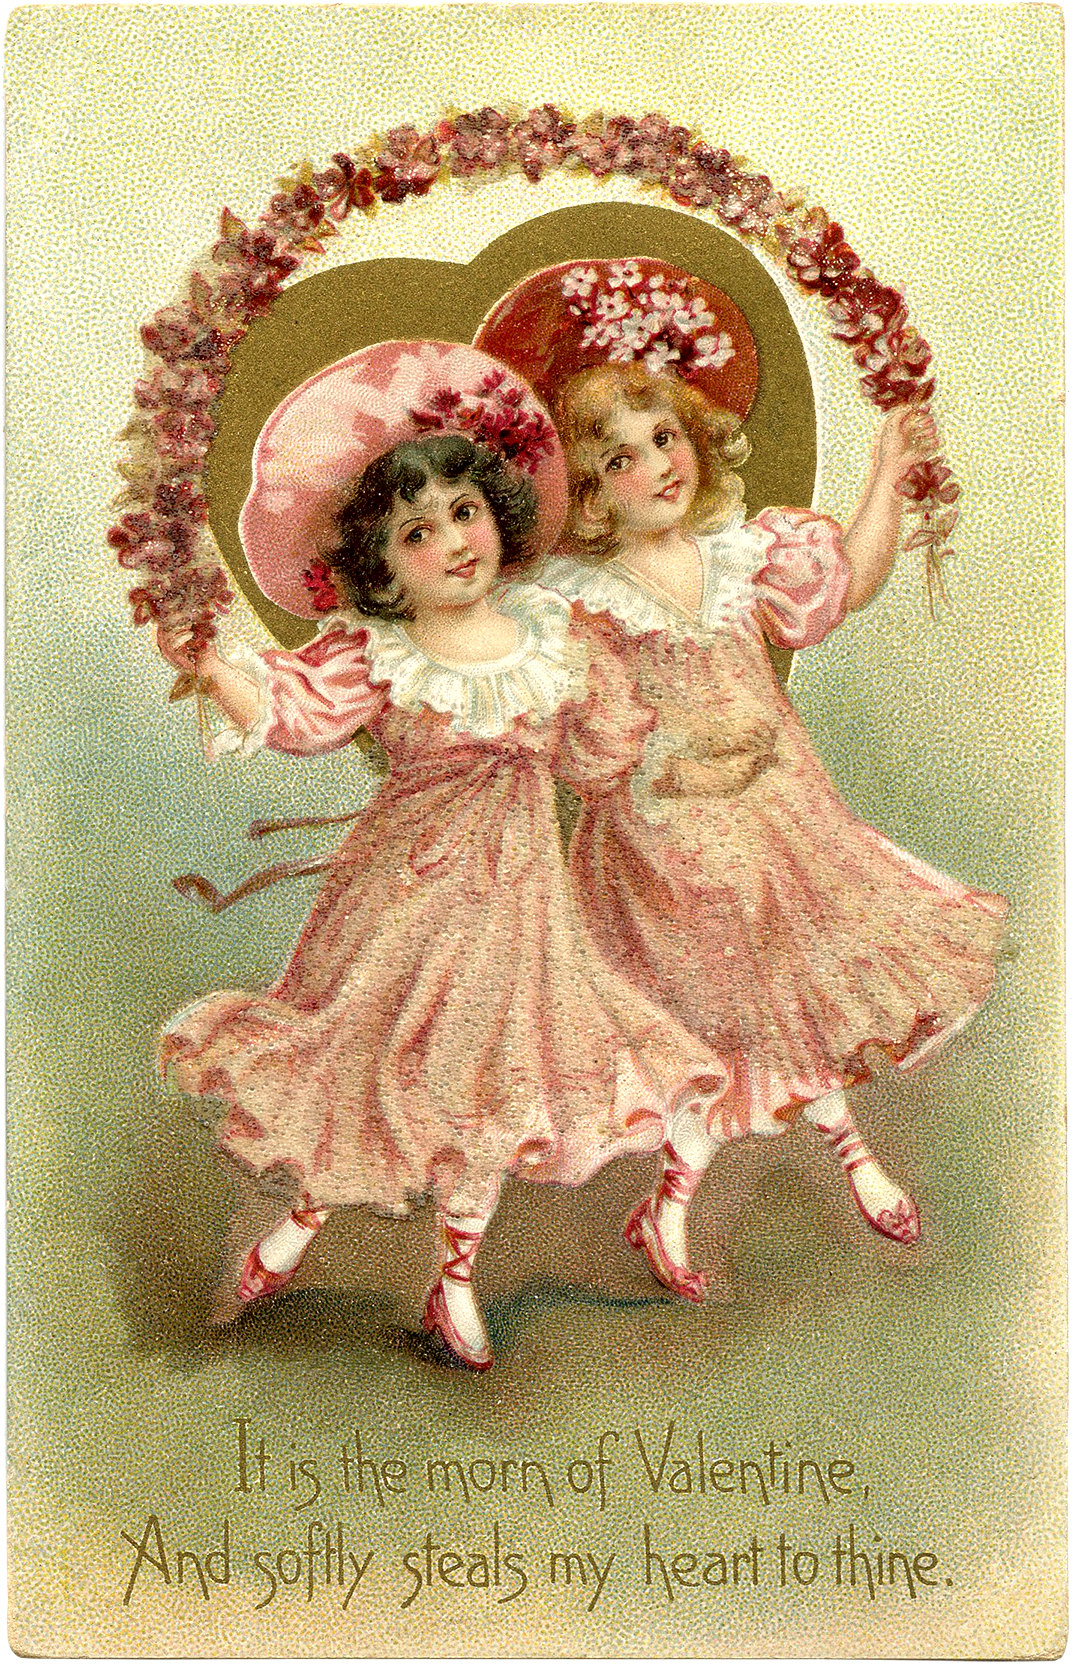 Free Vintage Valentine Image - The Graphics Fairy